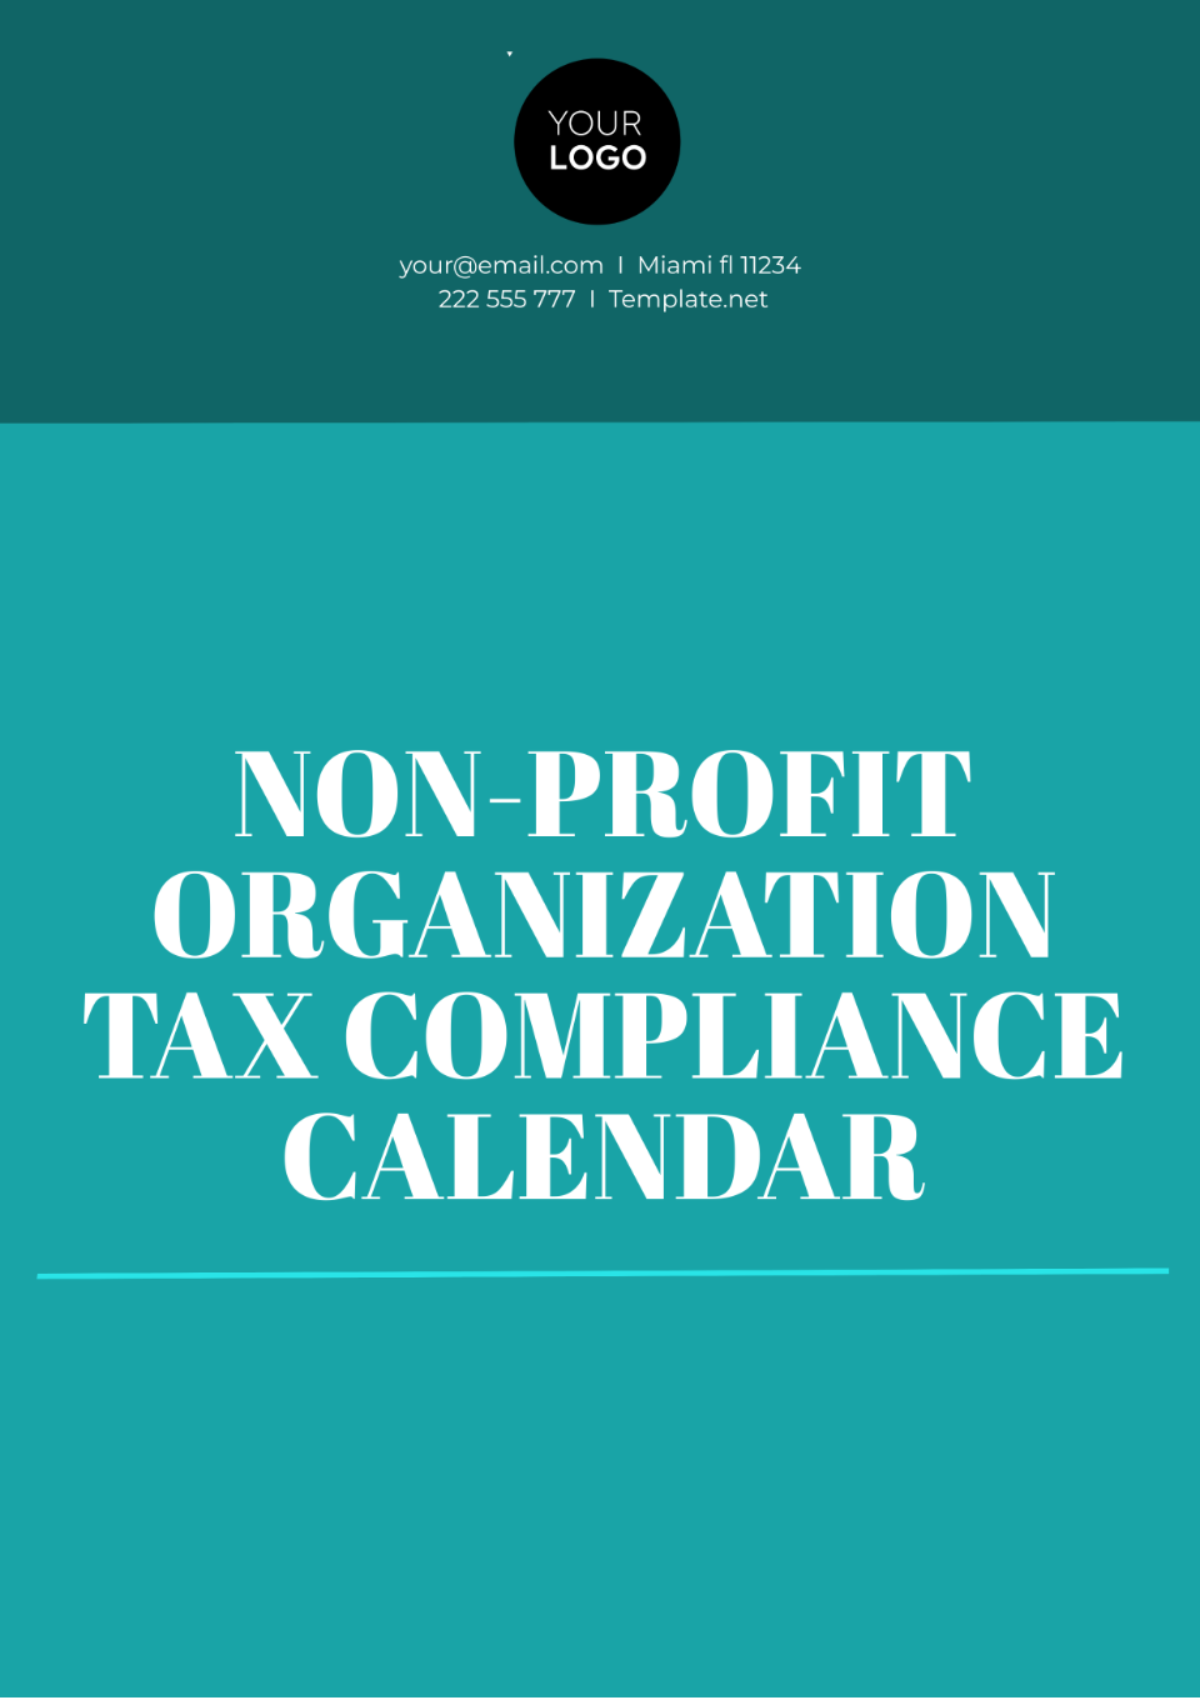 Non-Profit Organization Tax Compliance Calendar Template